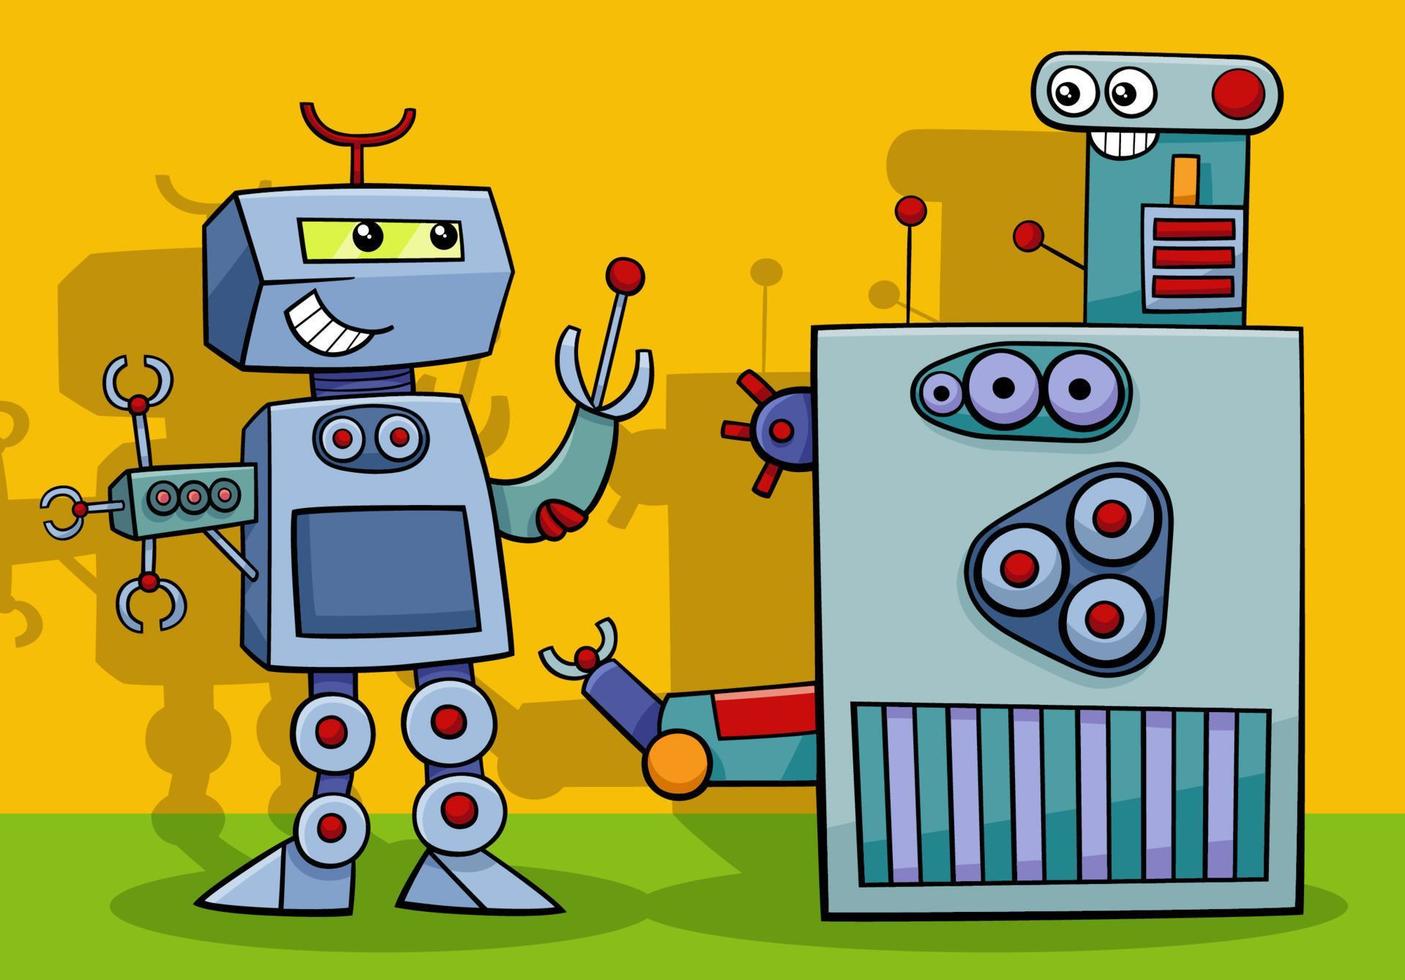 två komiska robotar fantasifigurer pratar vektor